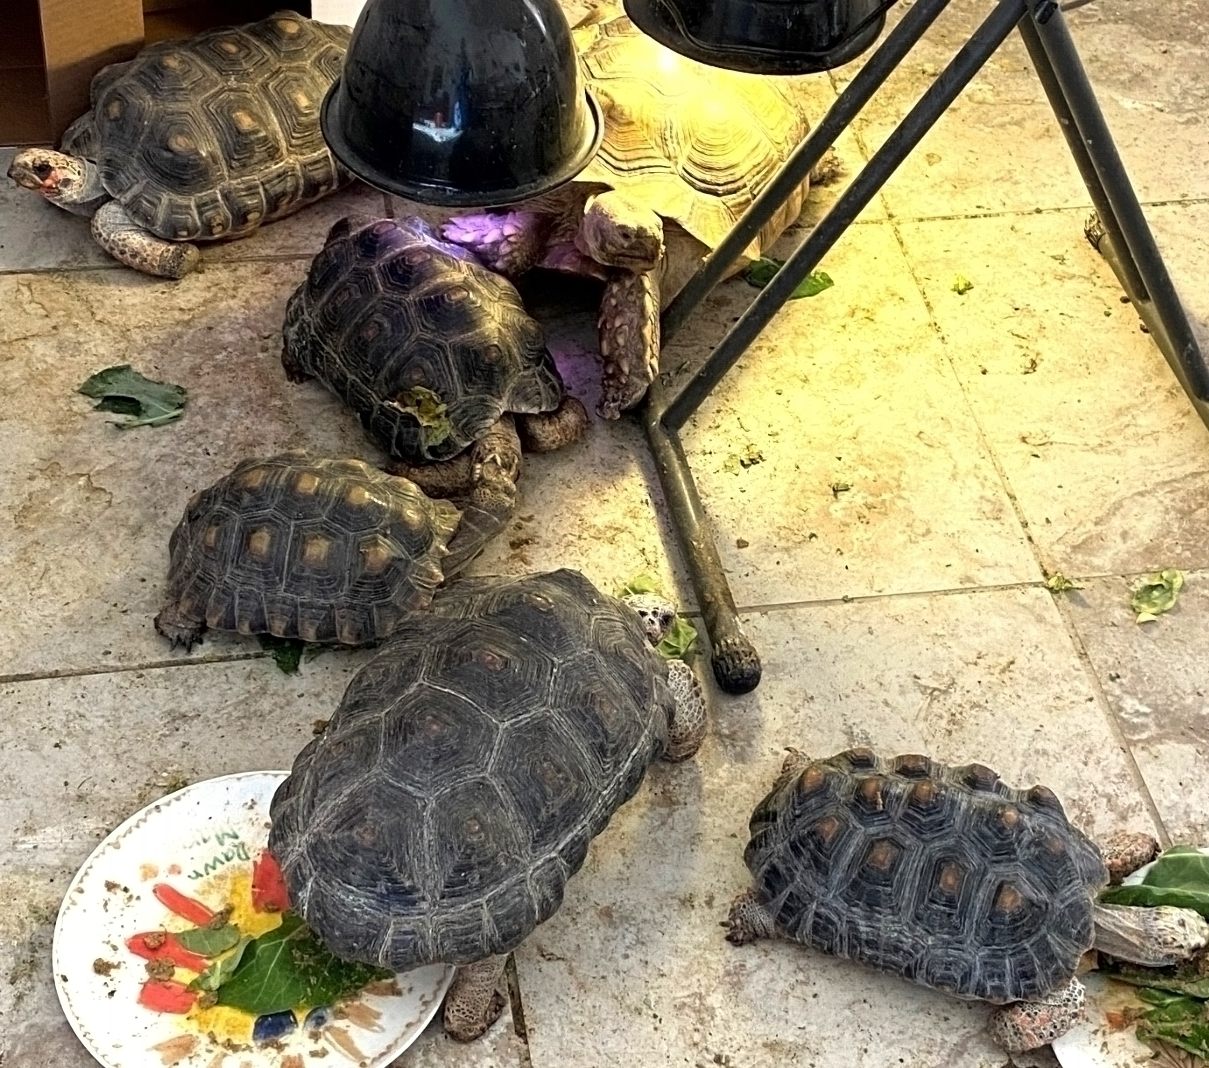 6 tortoises of three species gathered around a heat lamp